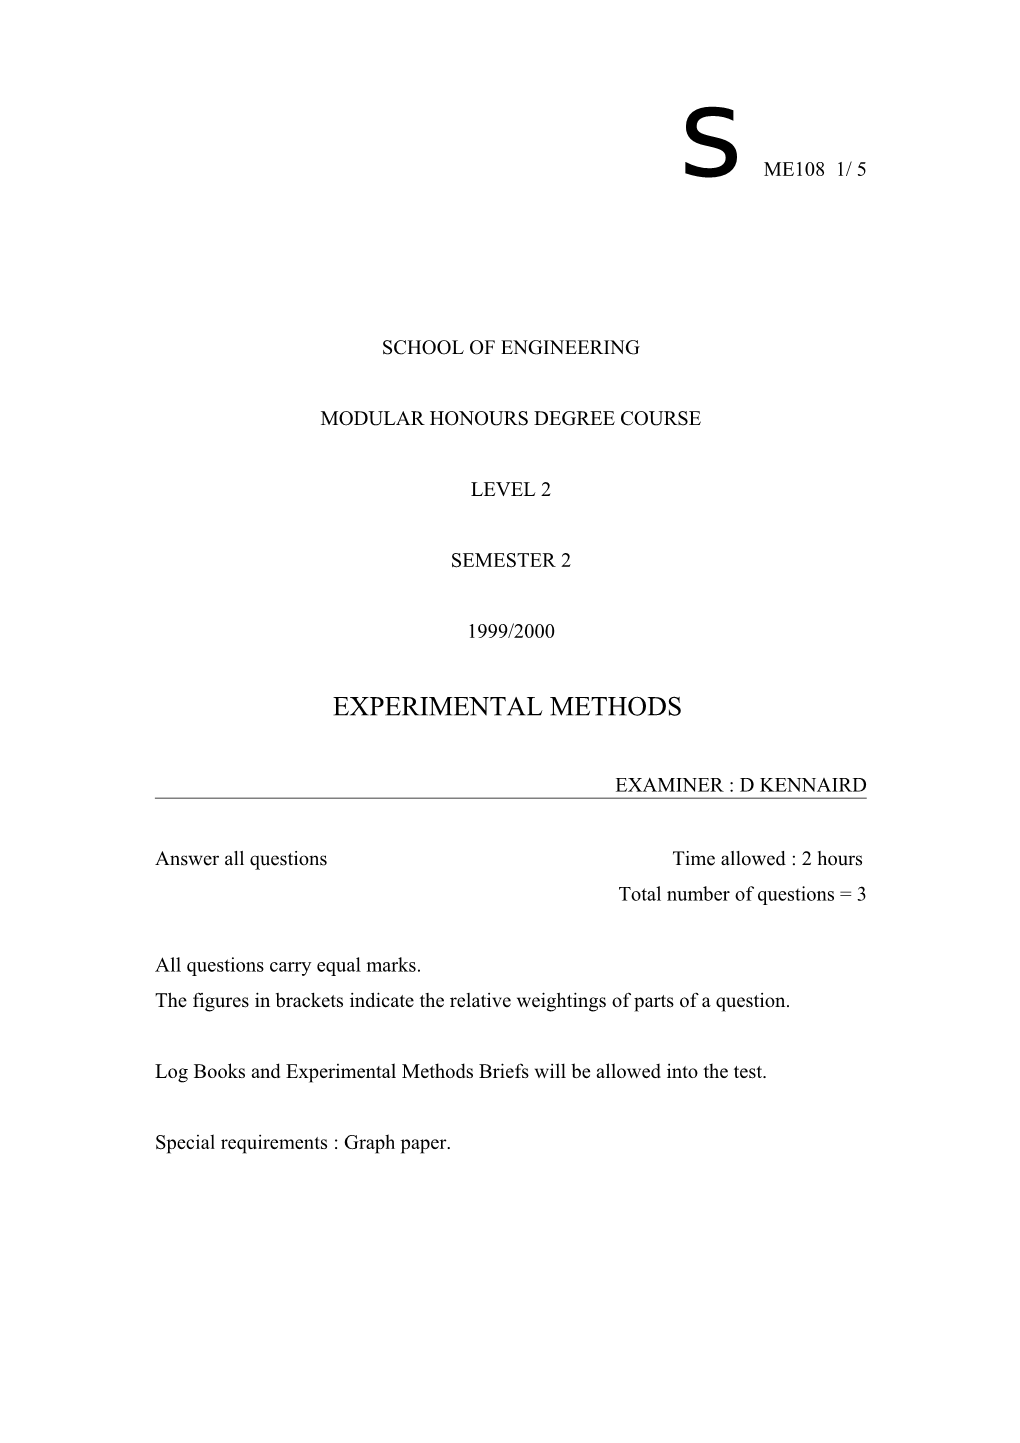 Beng 1 Experimental Methods Questions 99/00